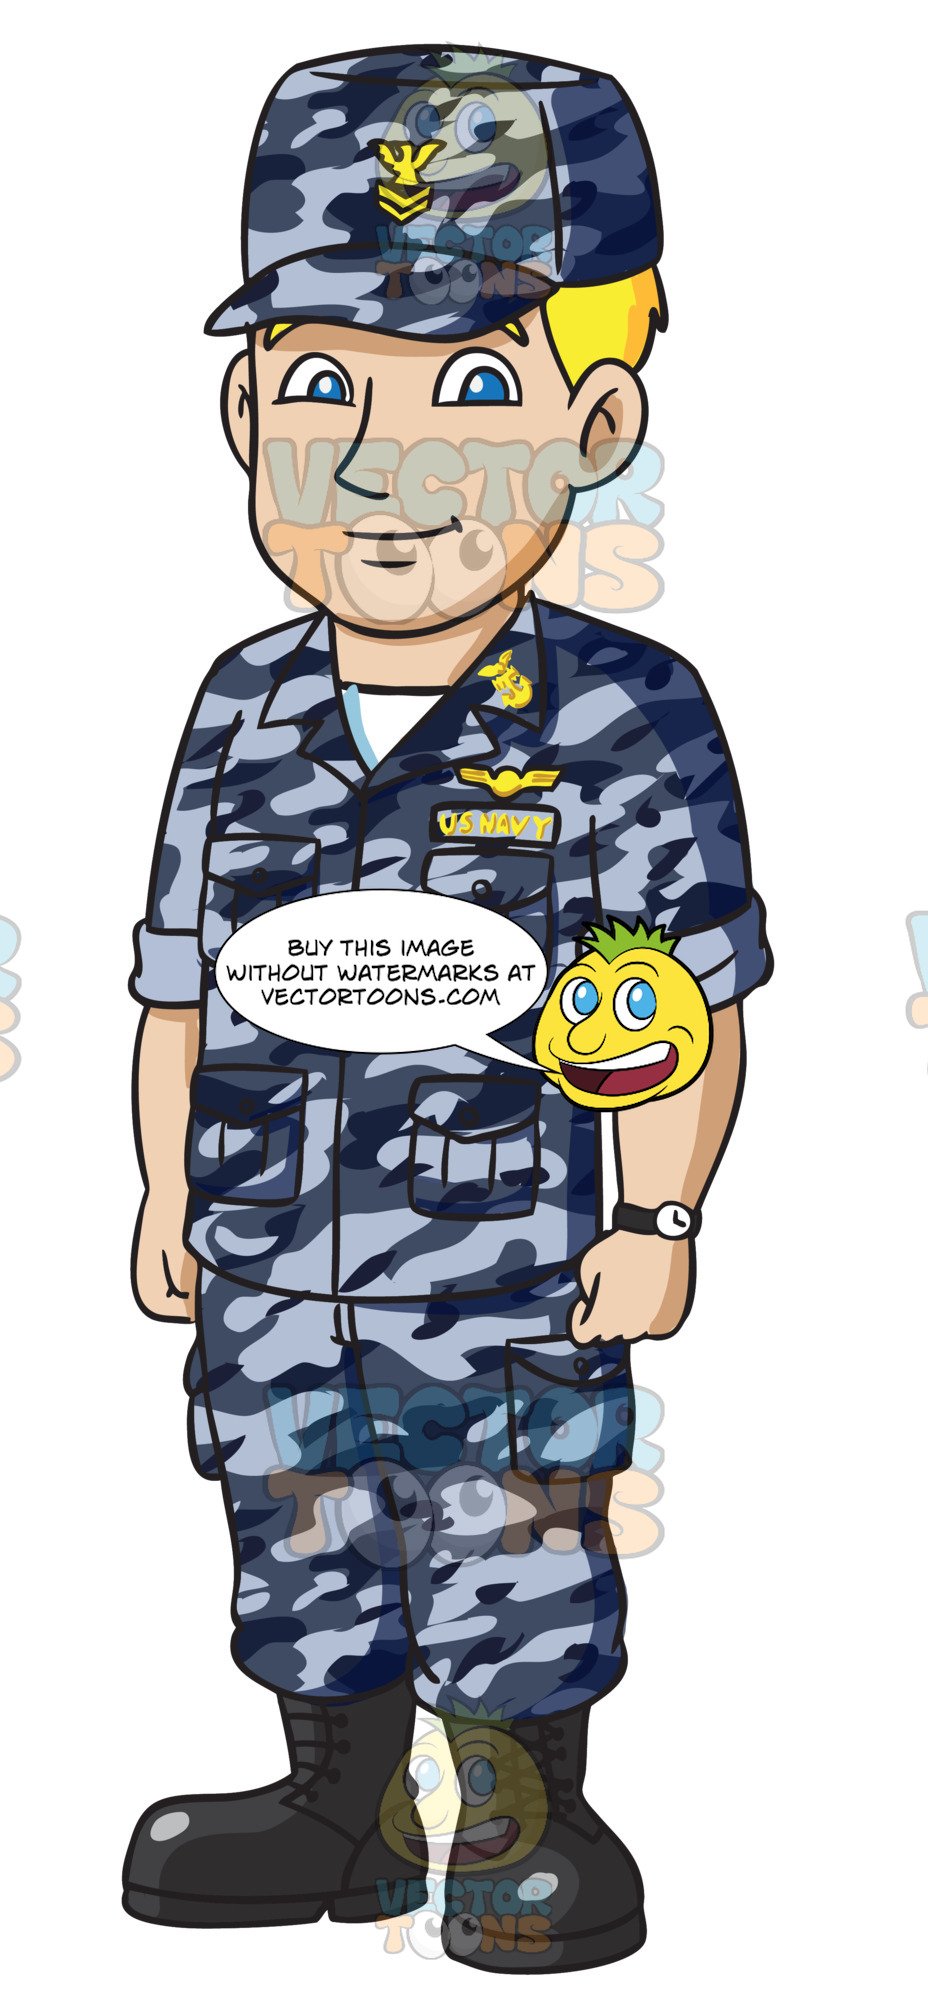 Navy clipart uniform navy, Navy uniform navy Transparent FREE for ...